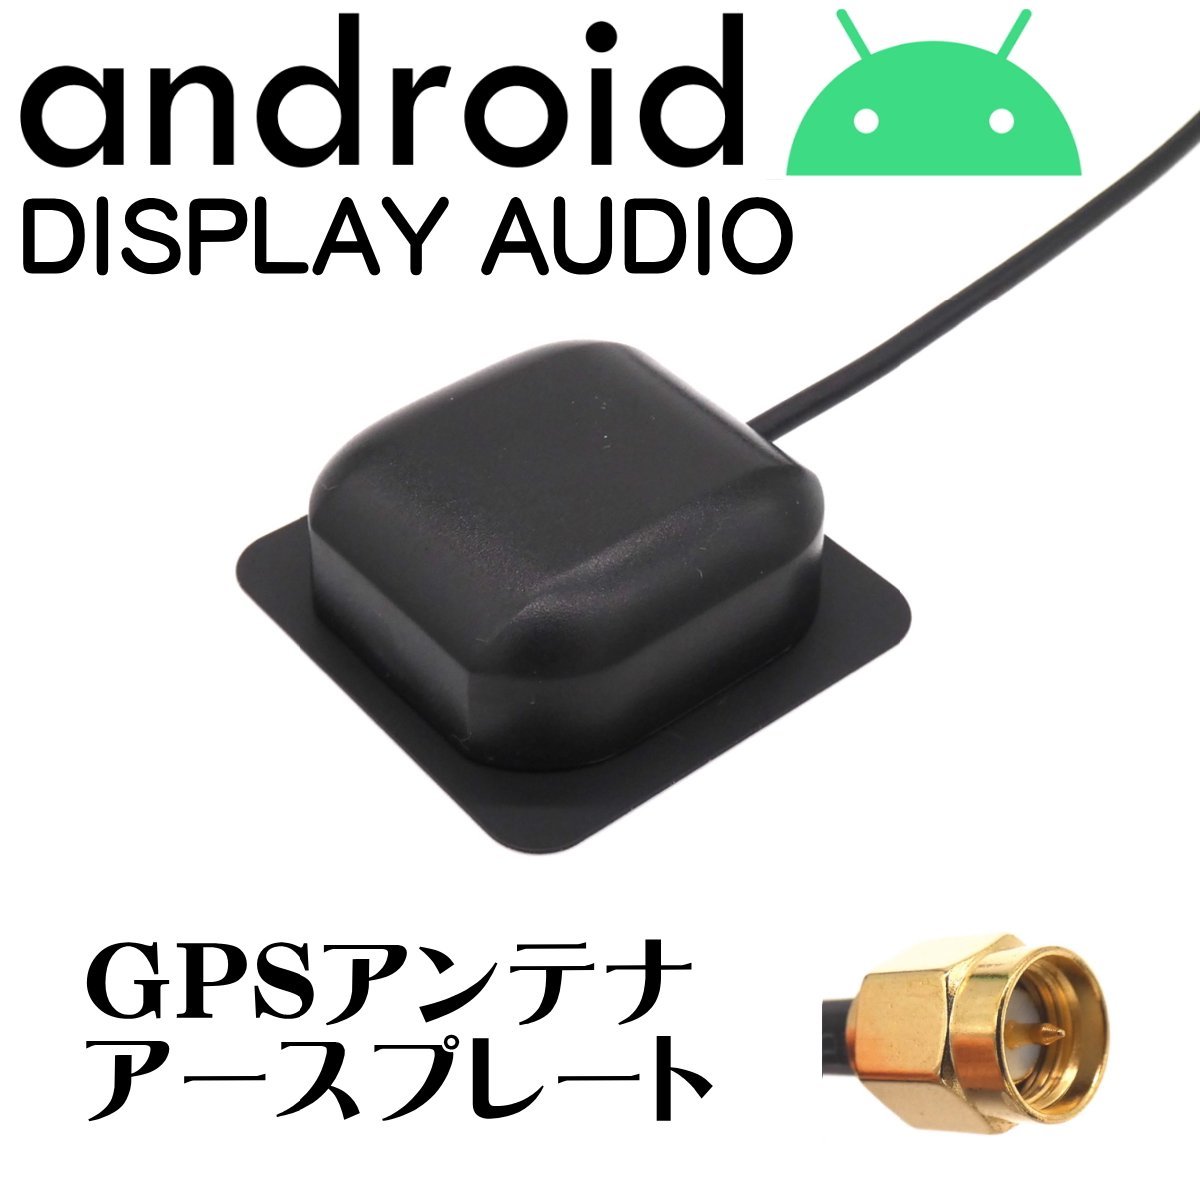 Android навигационная система дисплей аудио соответствует GPS antenna earth plate SMA 1m